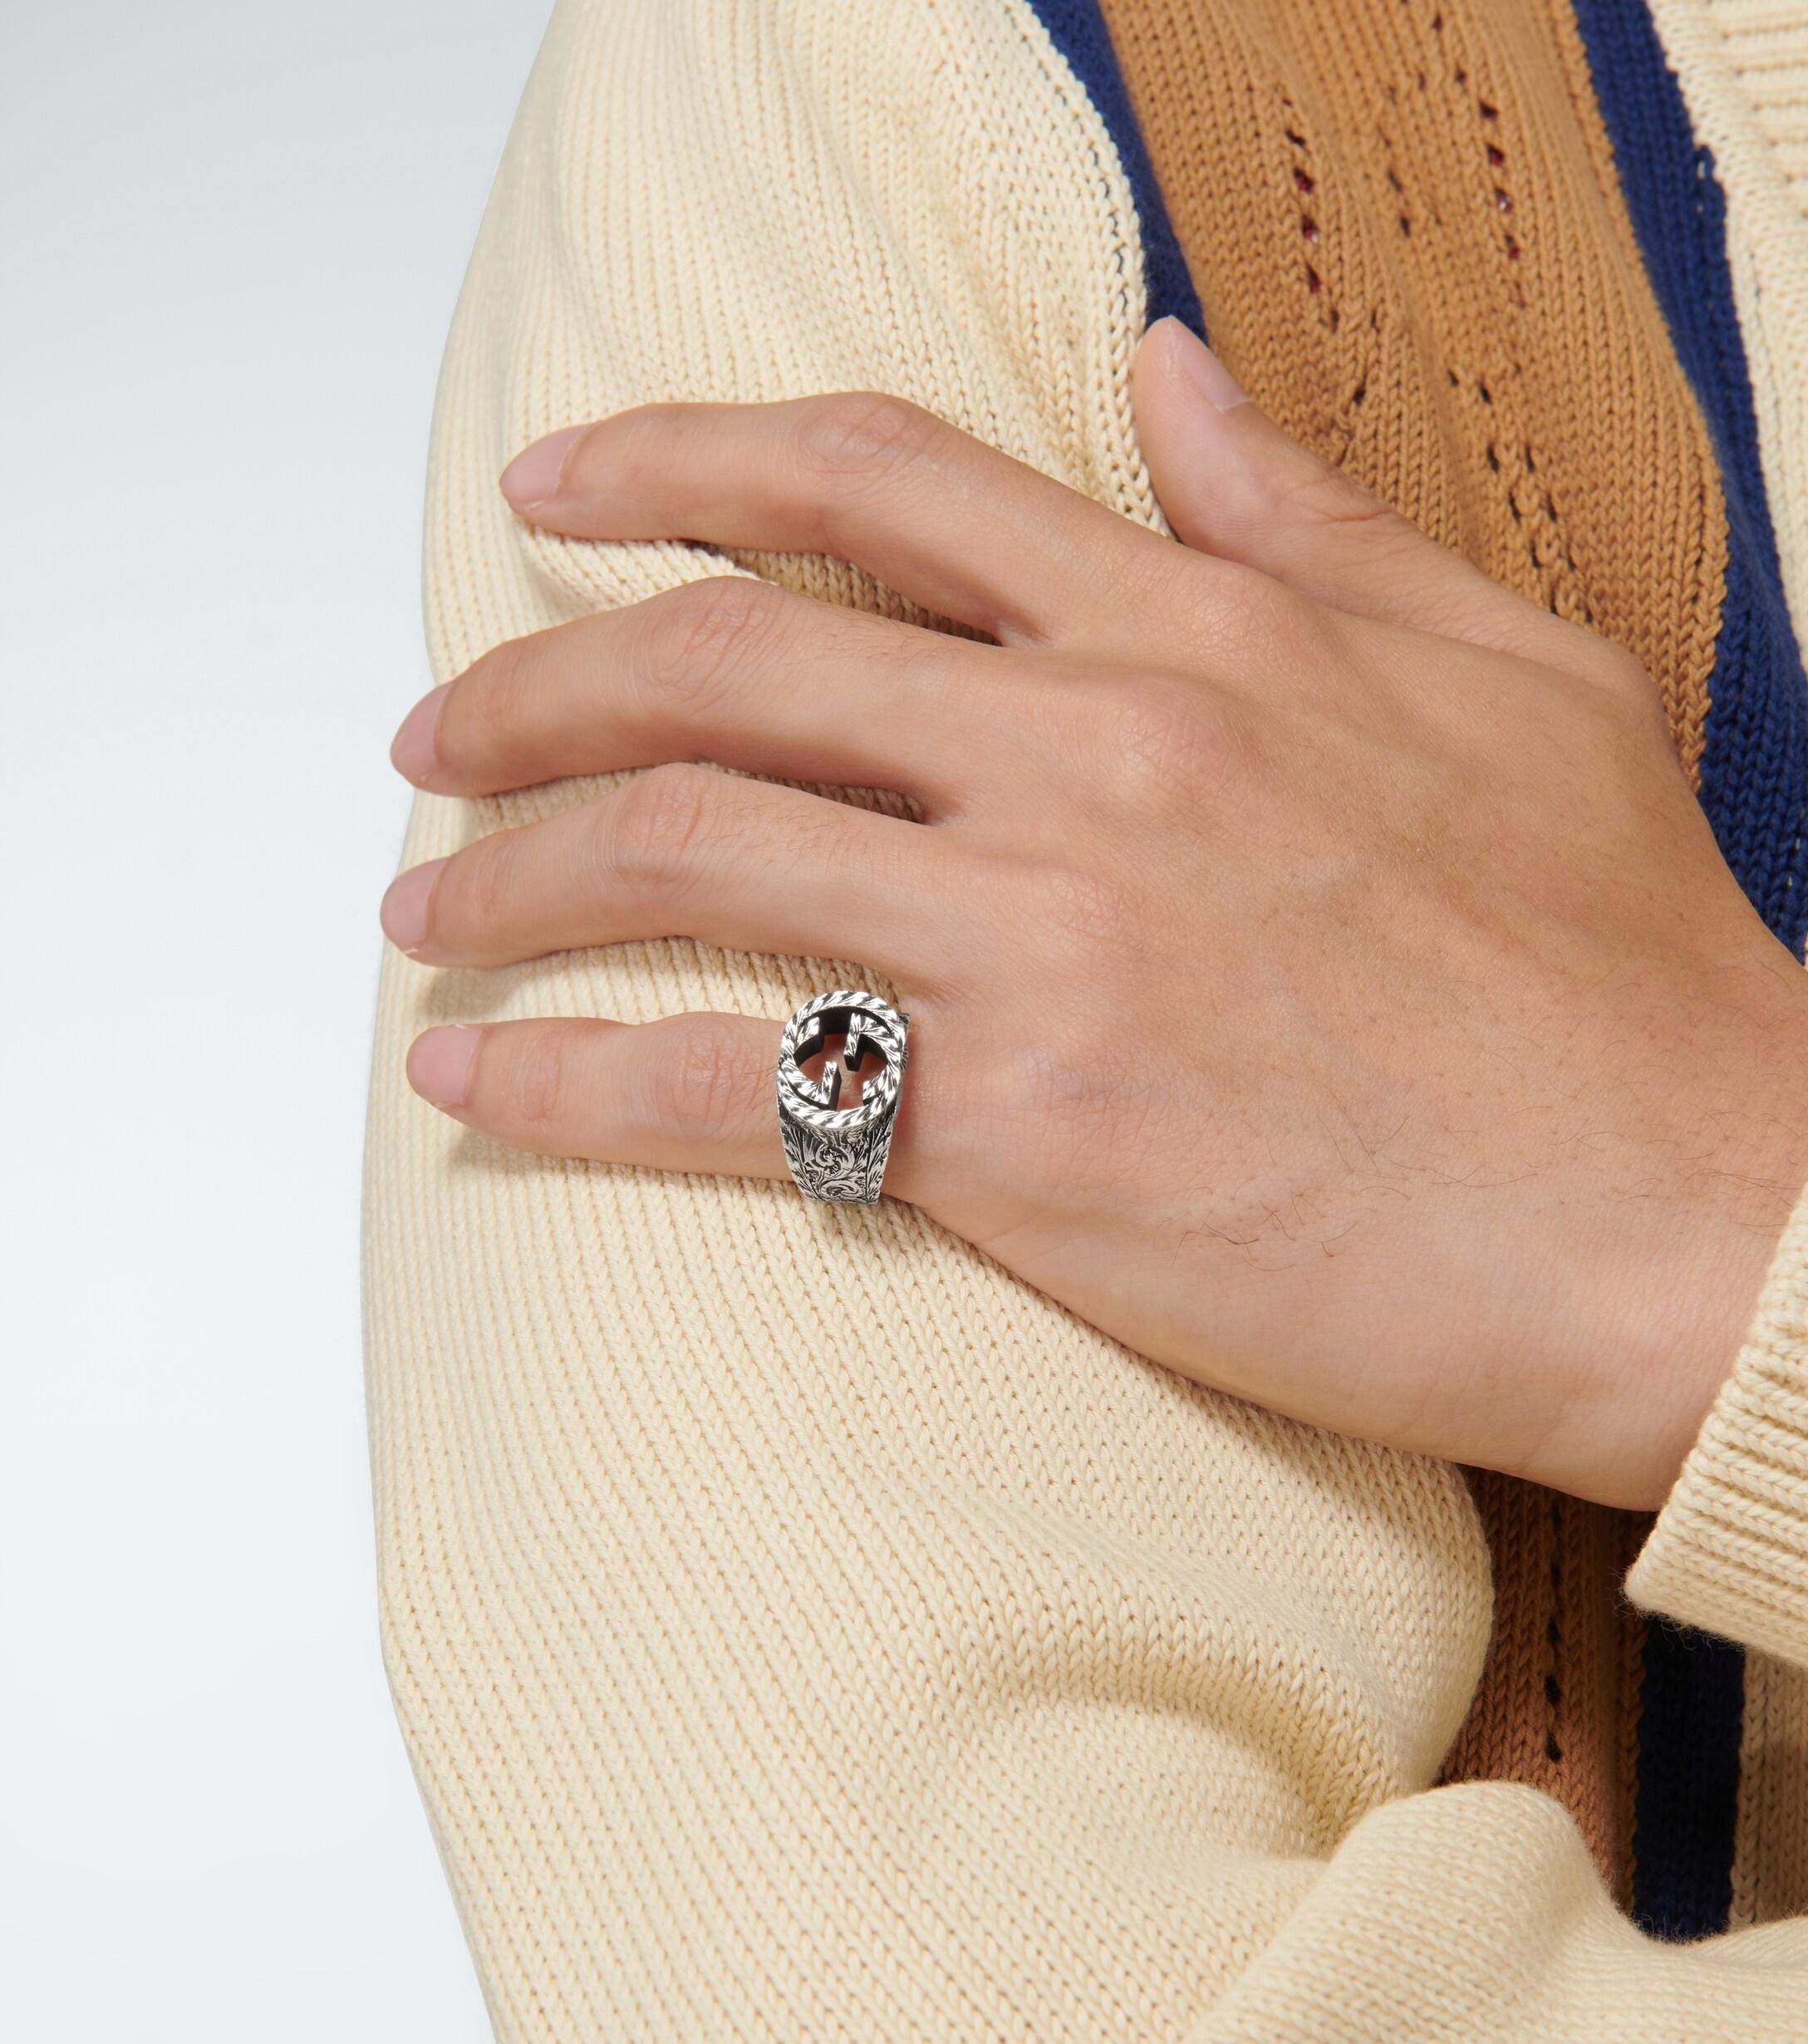 Gucci Interlocking G Silver Ring in Metallic for Men - Lyst